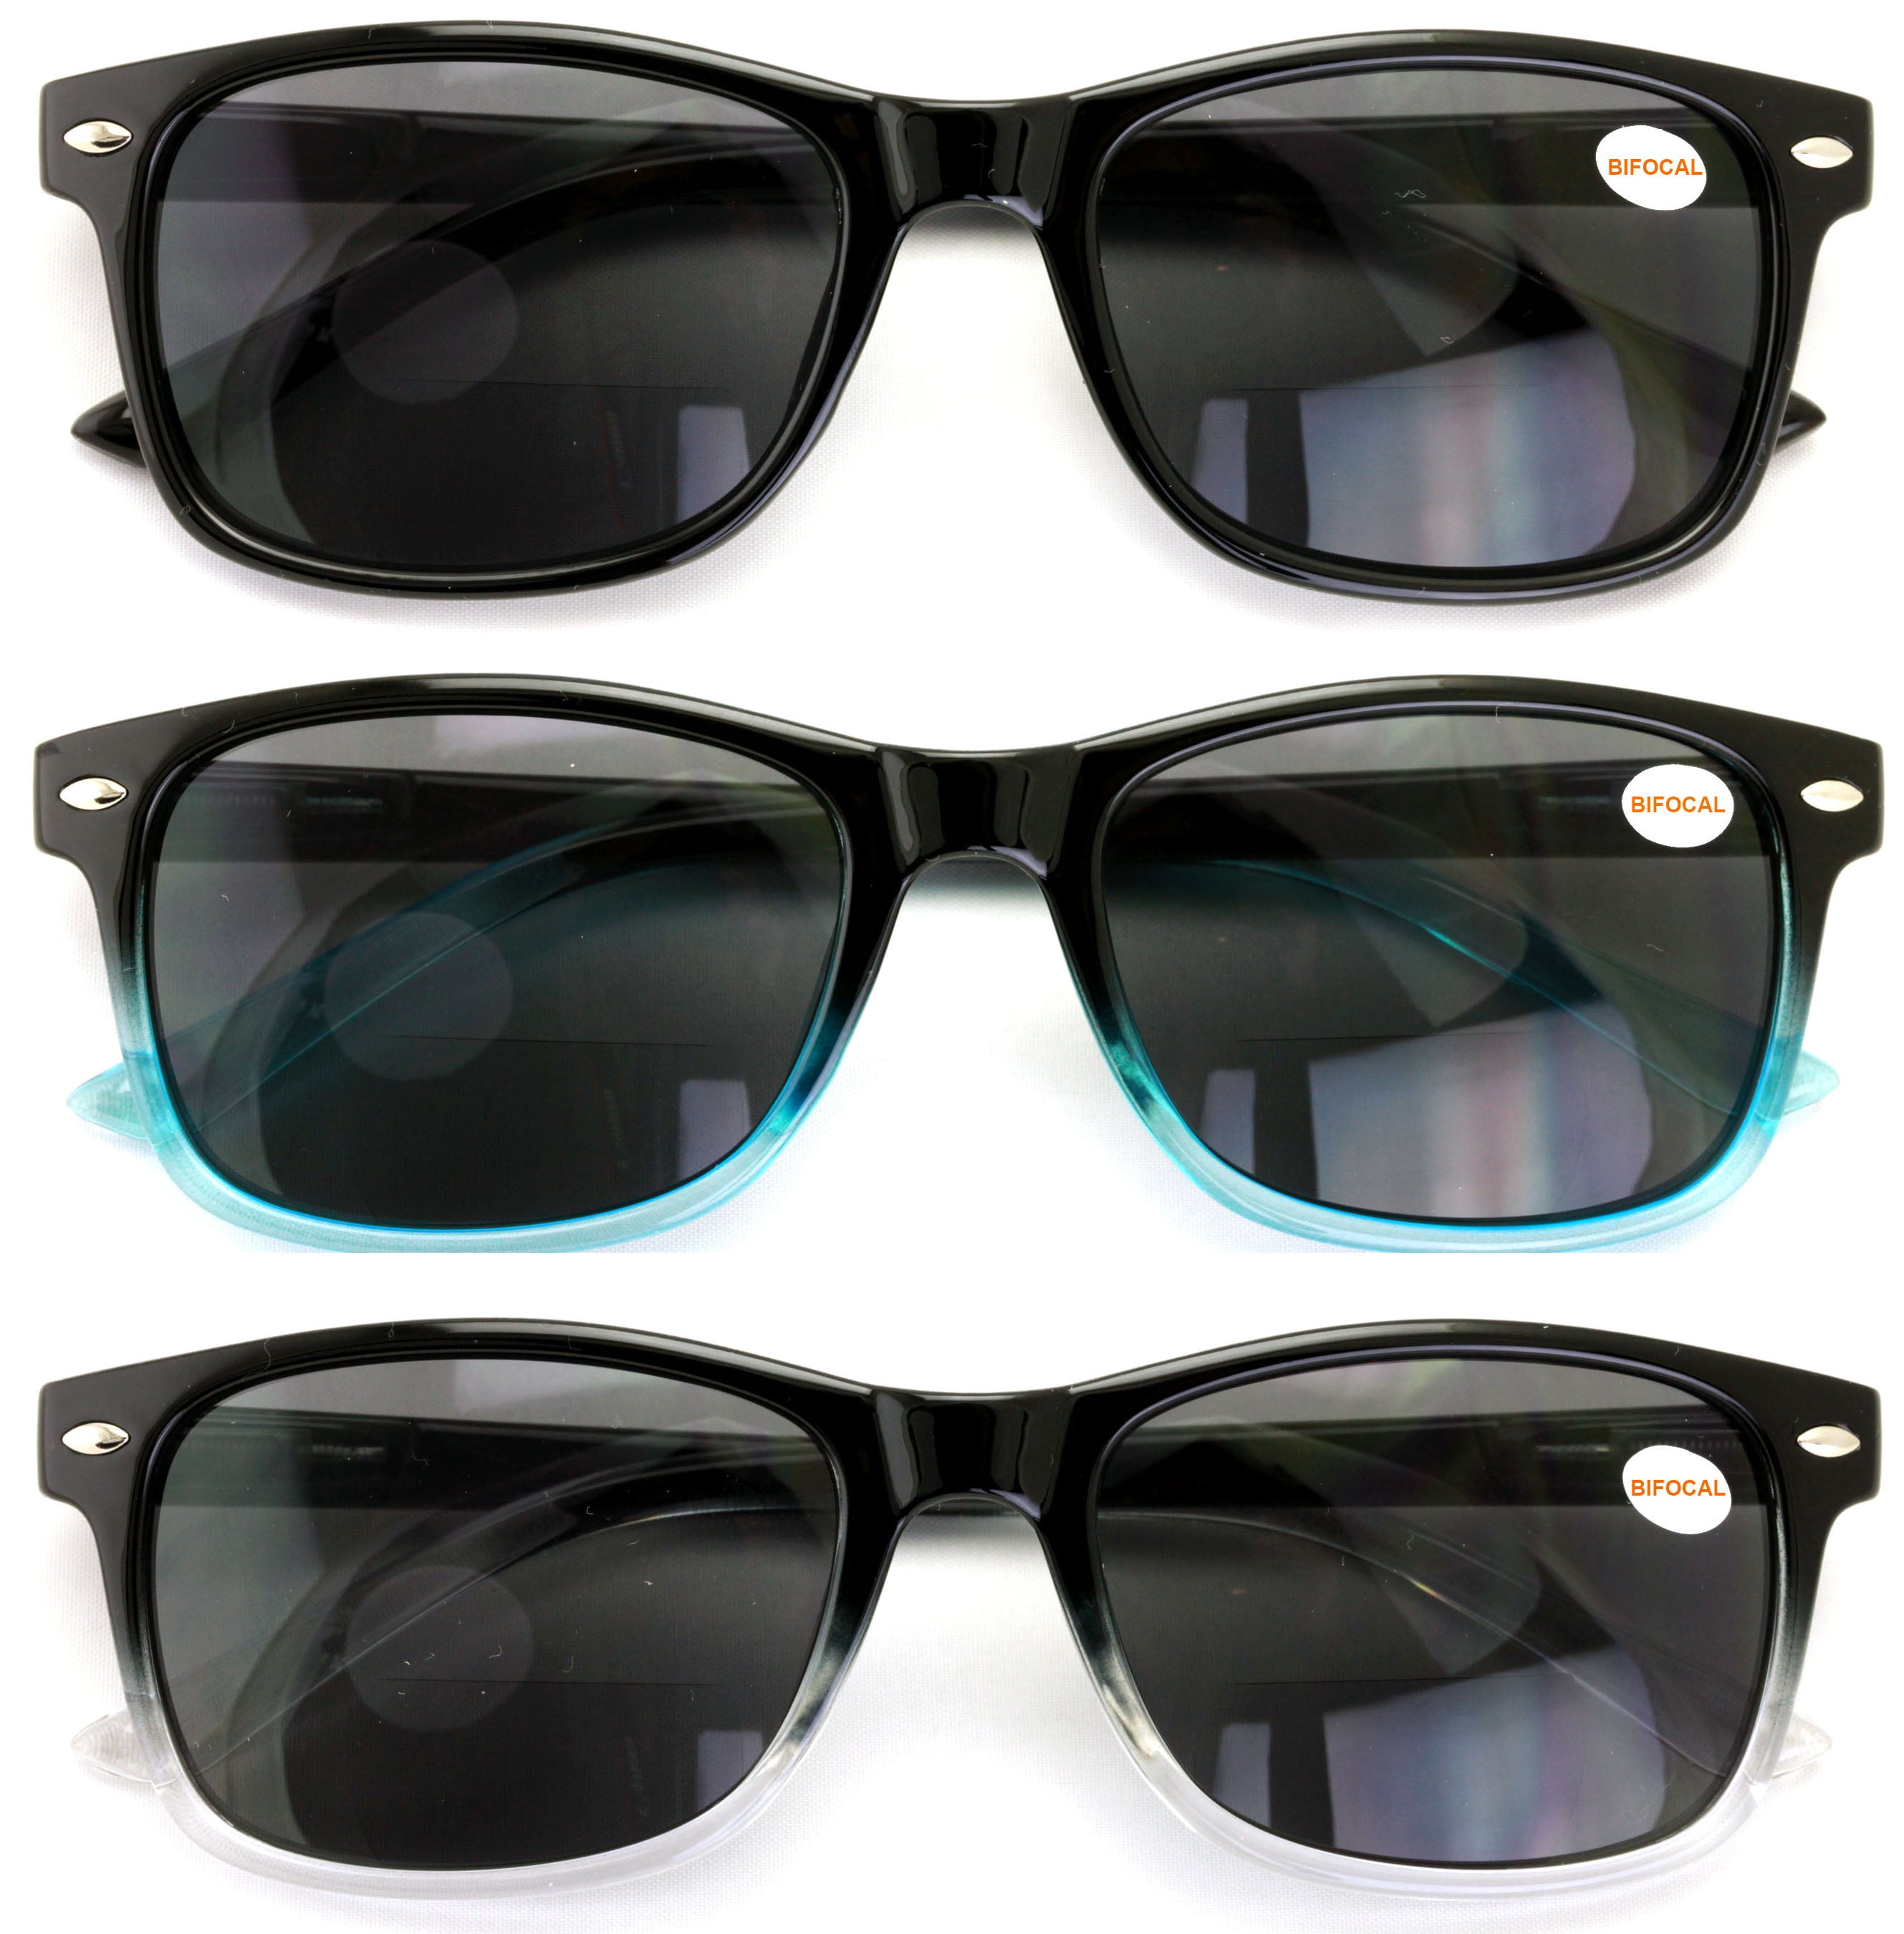 No Bifocal 3 Pair of Unisex Classic Reading Sunglasses for Men and Women 